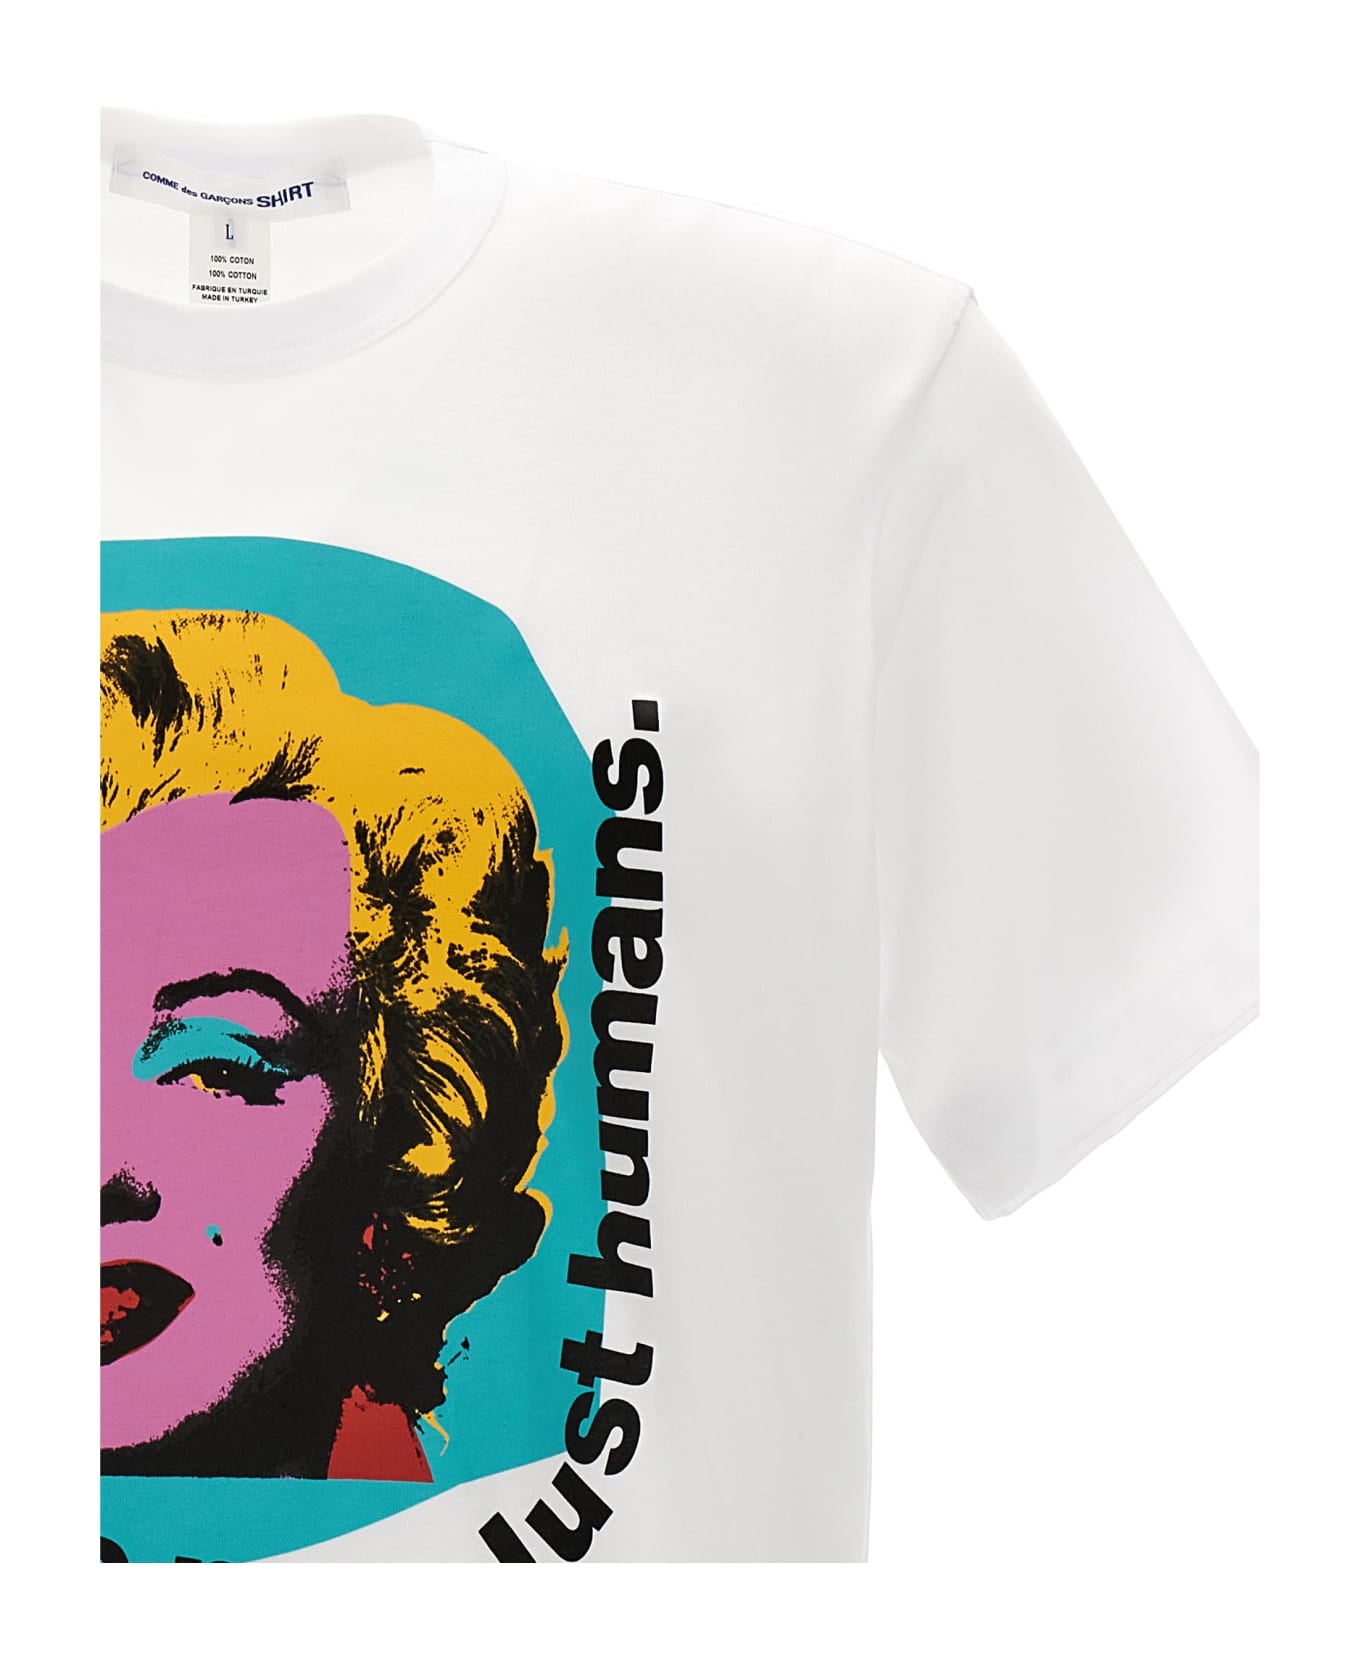 Comme des Garçons Shirt 'andy Warhol' T-shirt - White